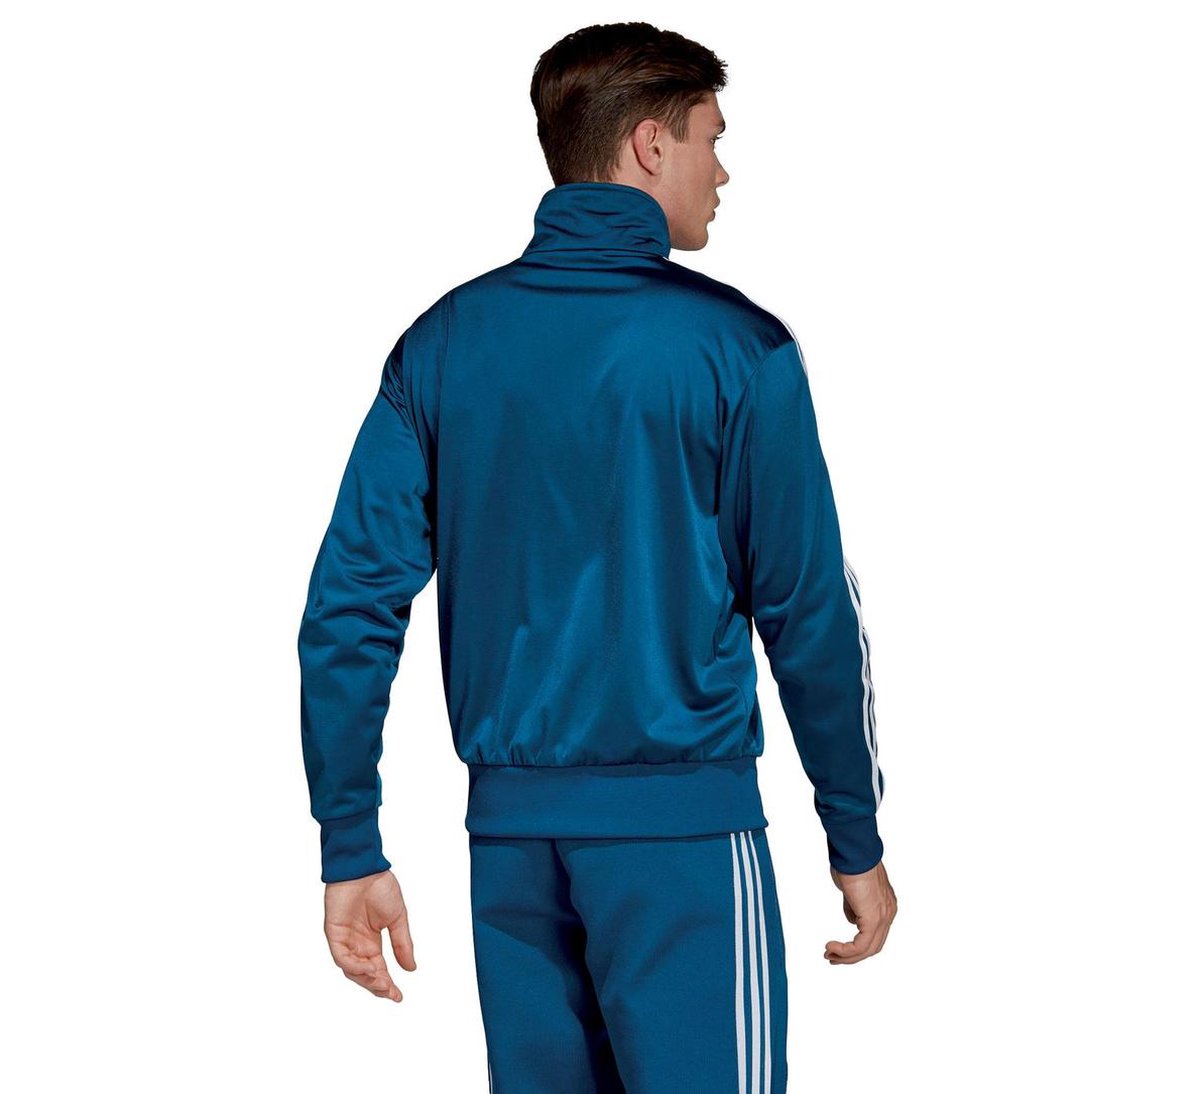 adidas Vest - Maat L - Mannen - blauw/wit bol.com